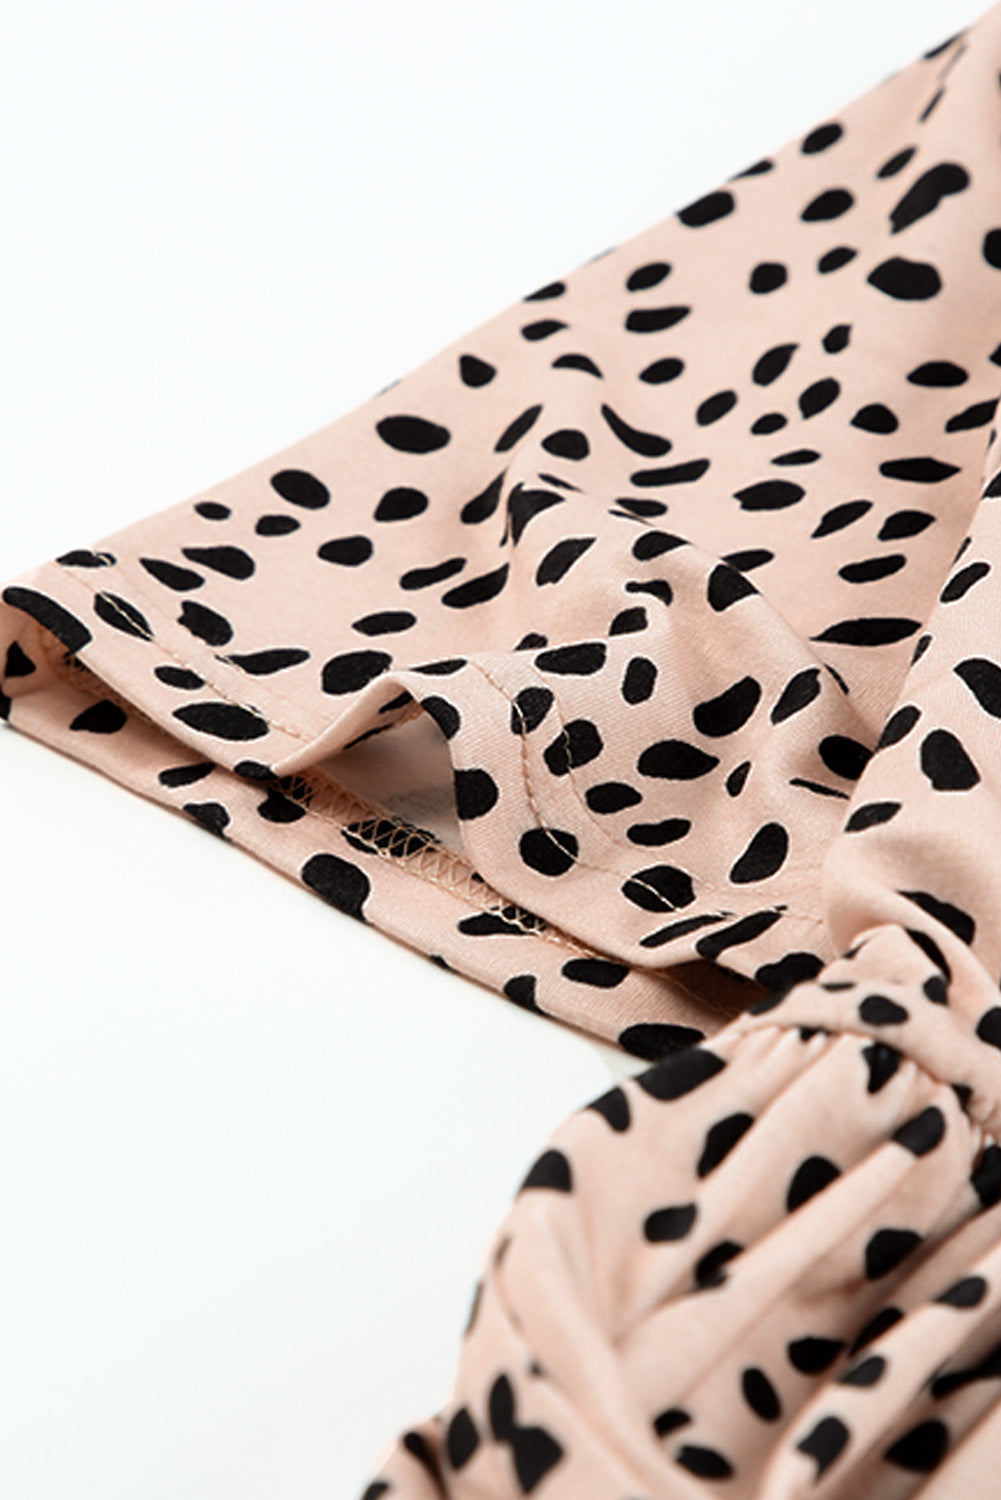 Khaki Short Sleeve Casual Leopard Print Dress for Women